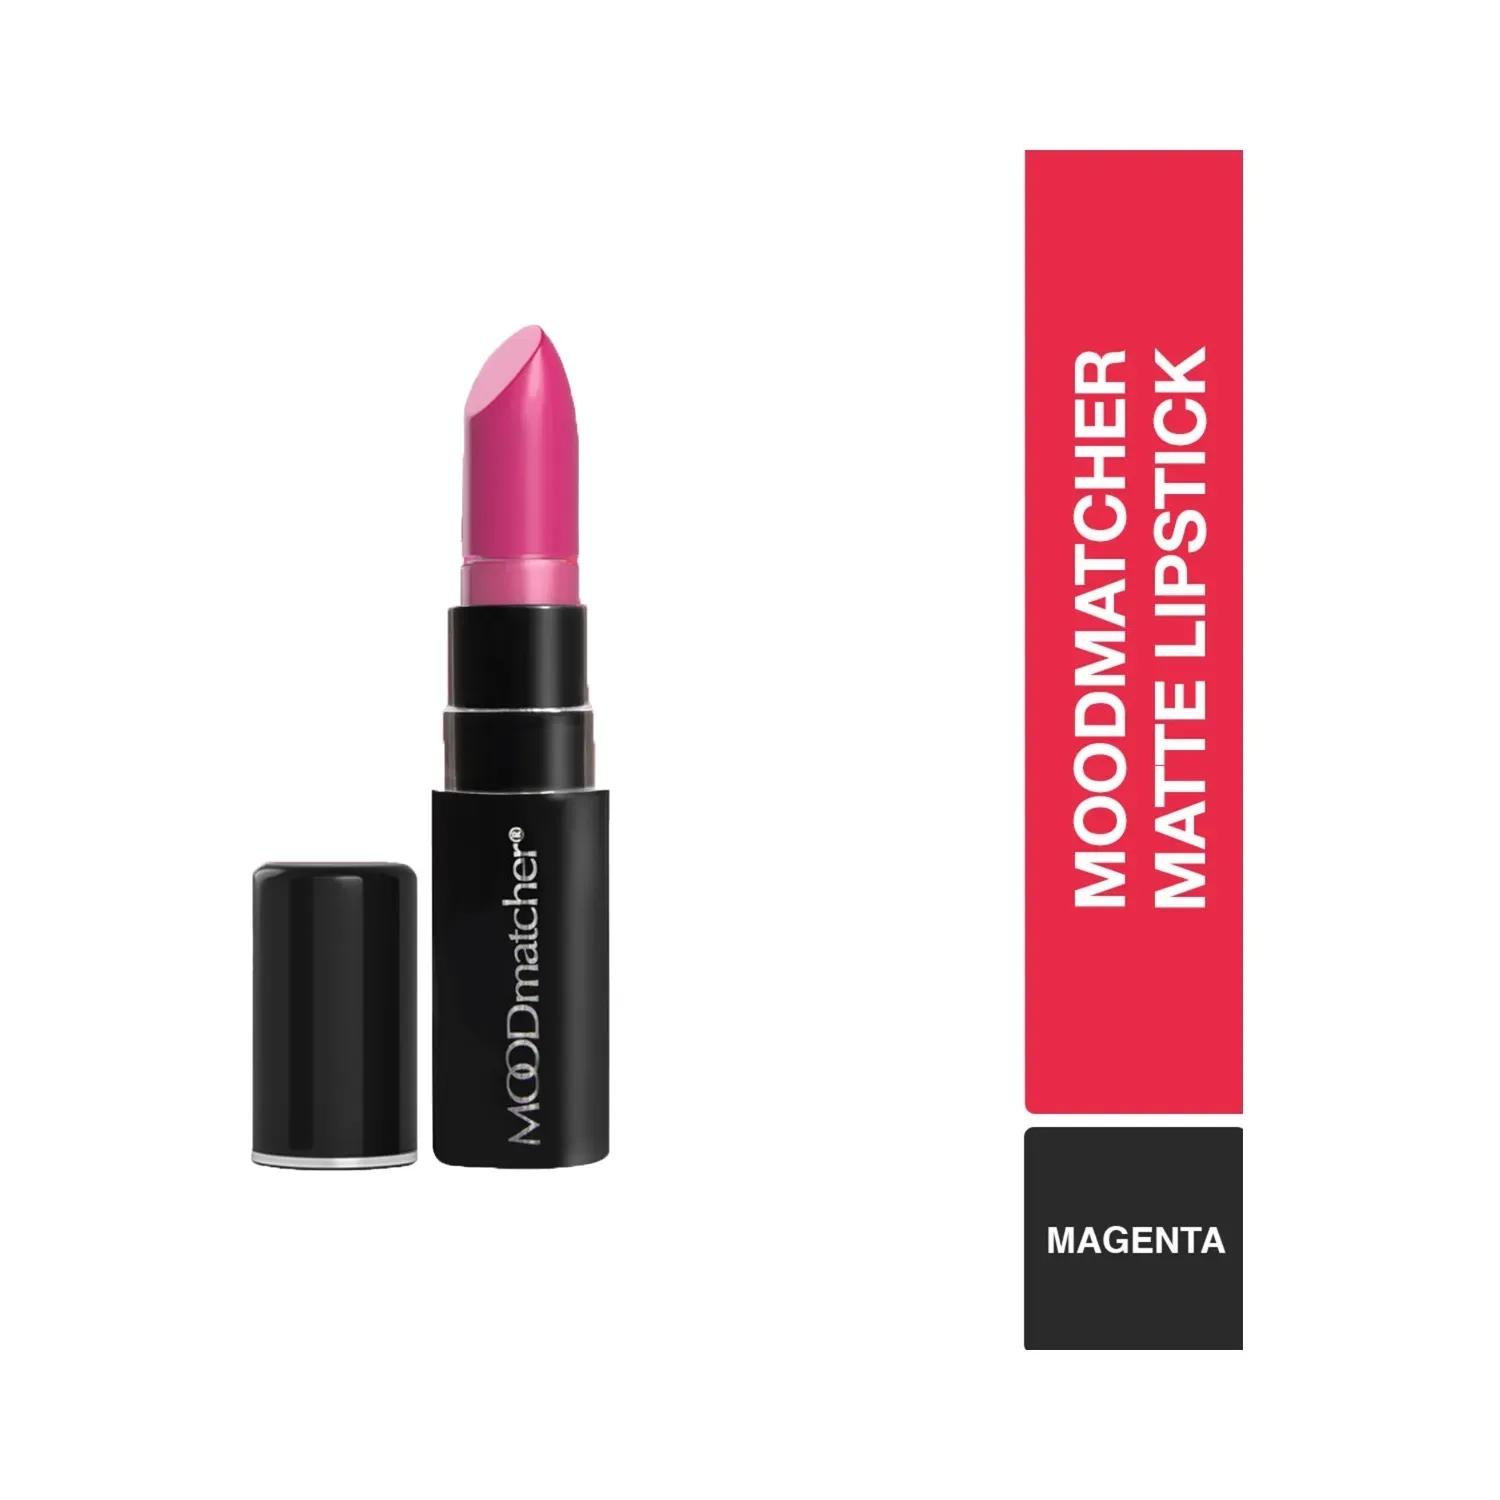 fran wilson moodmatcher lipstick - magenta (3.5g)